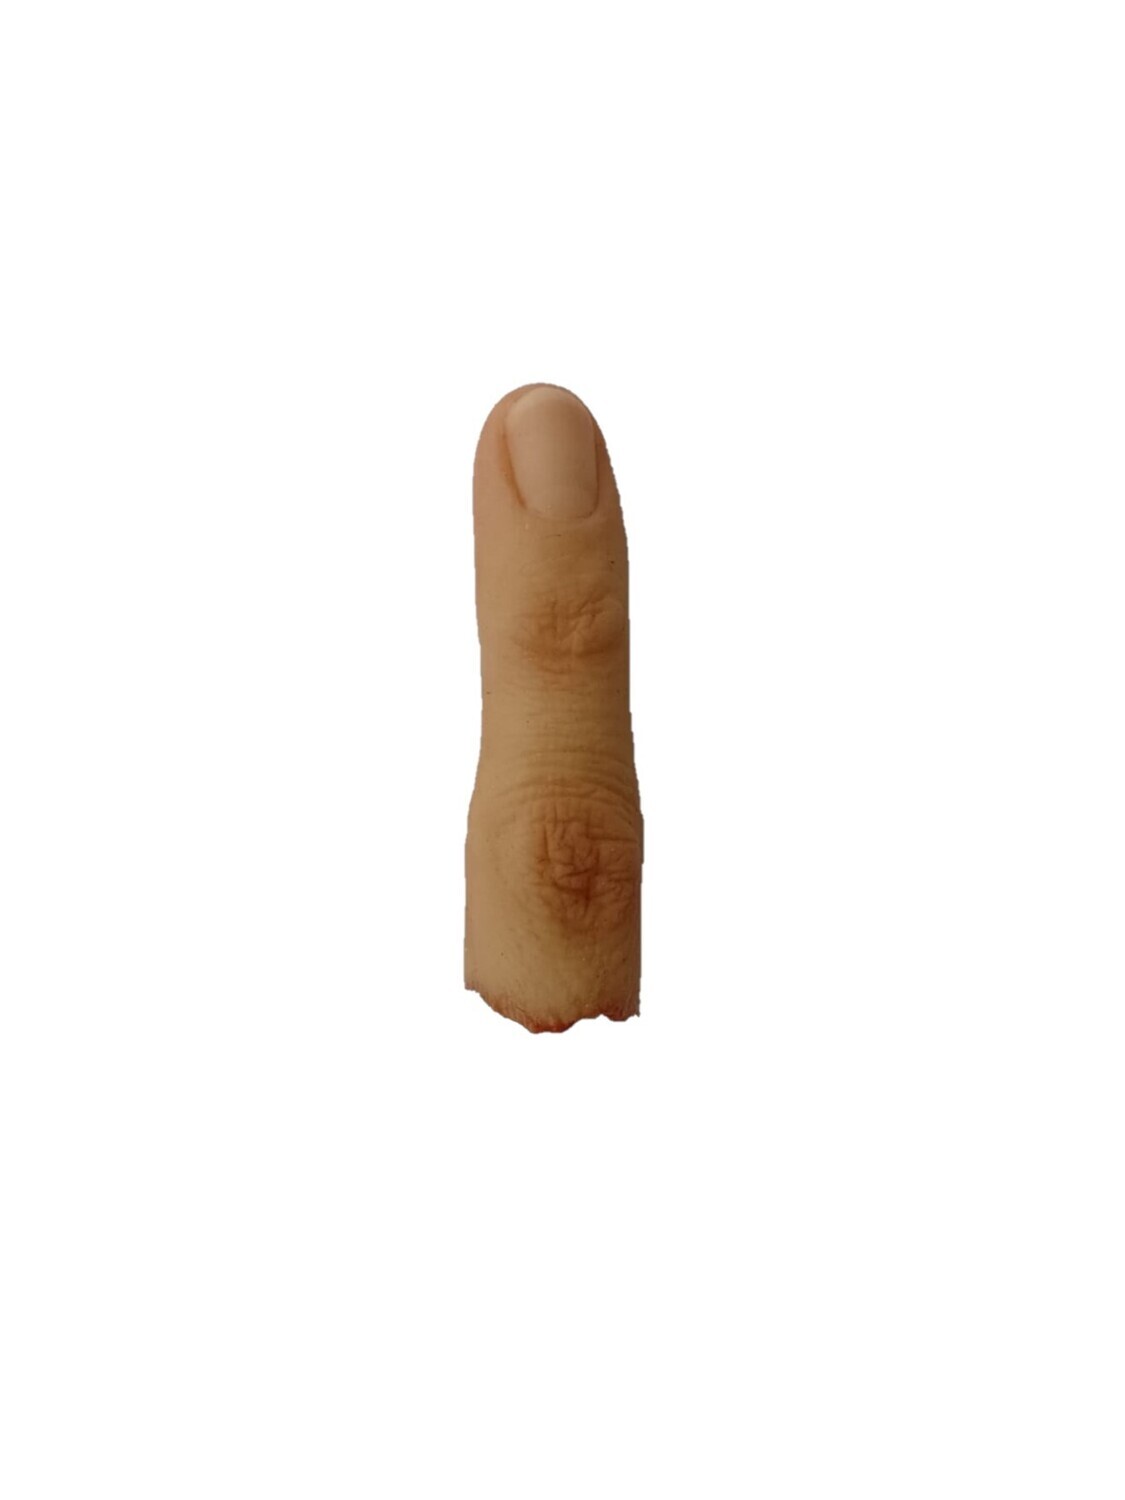 Amputat - kleiner Finger